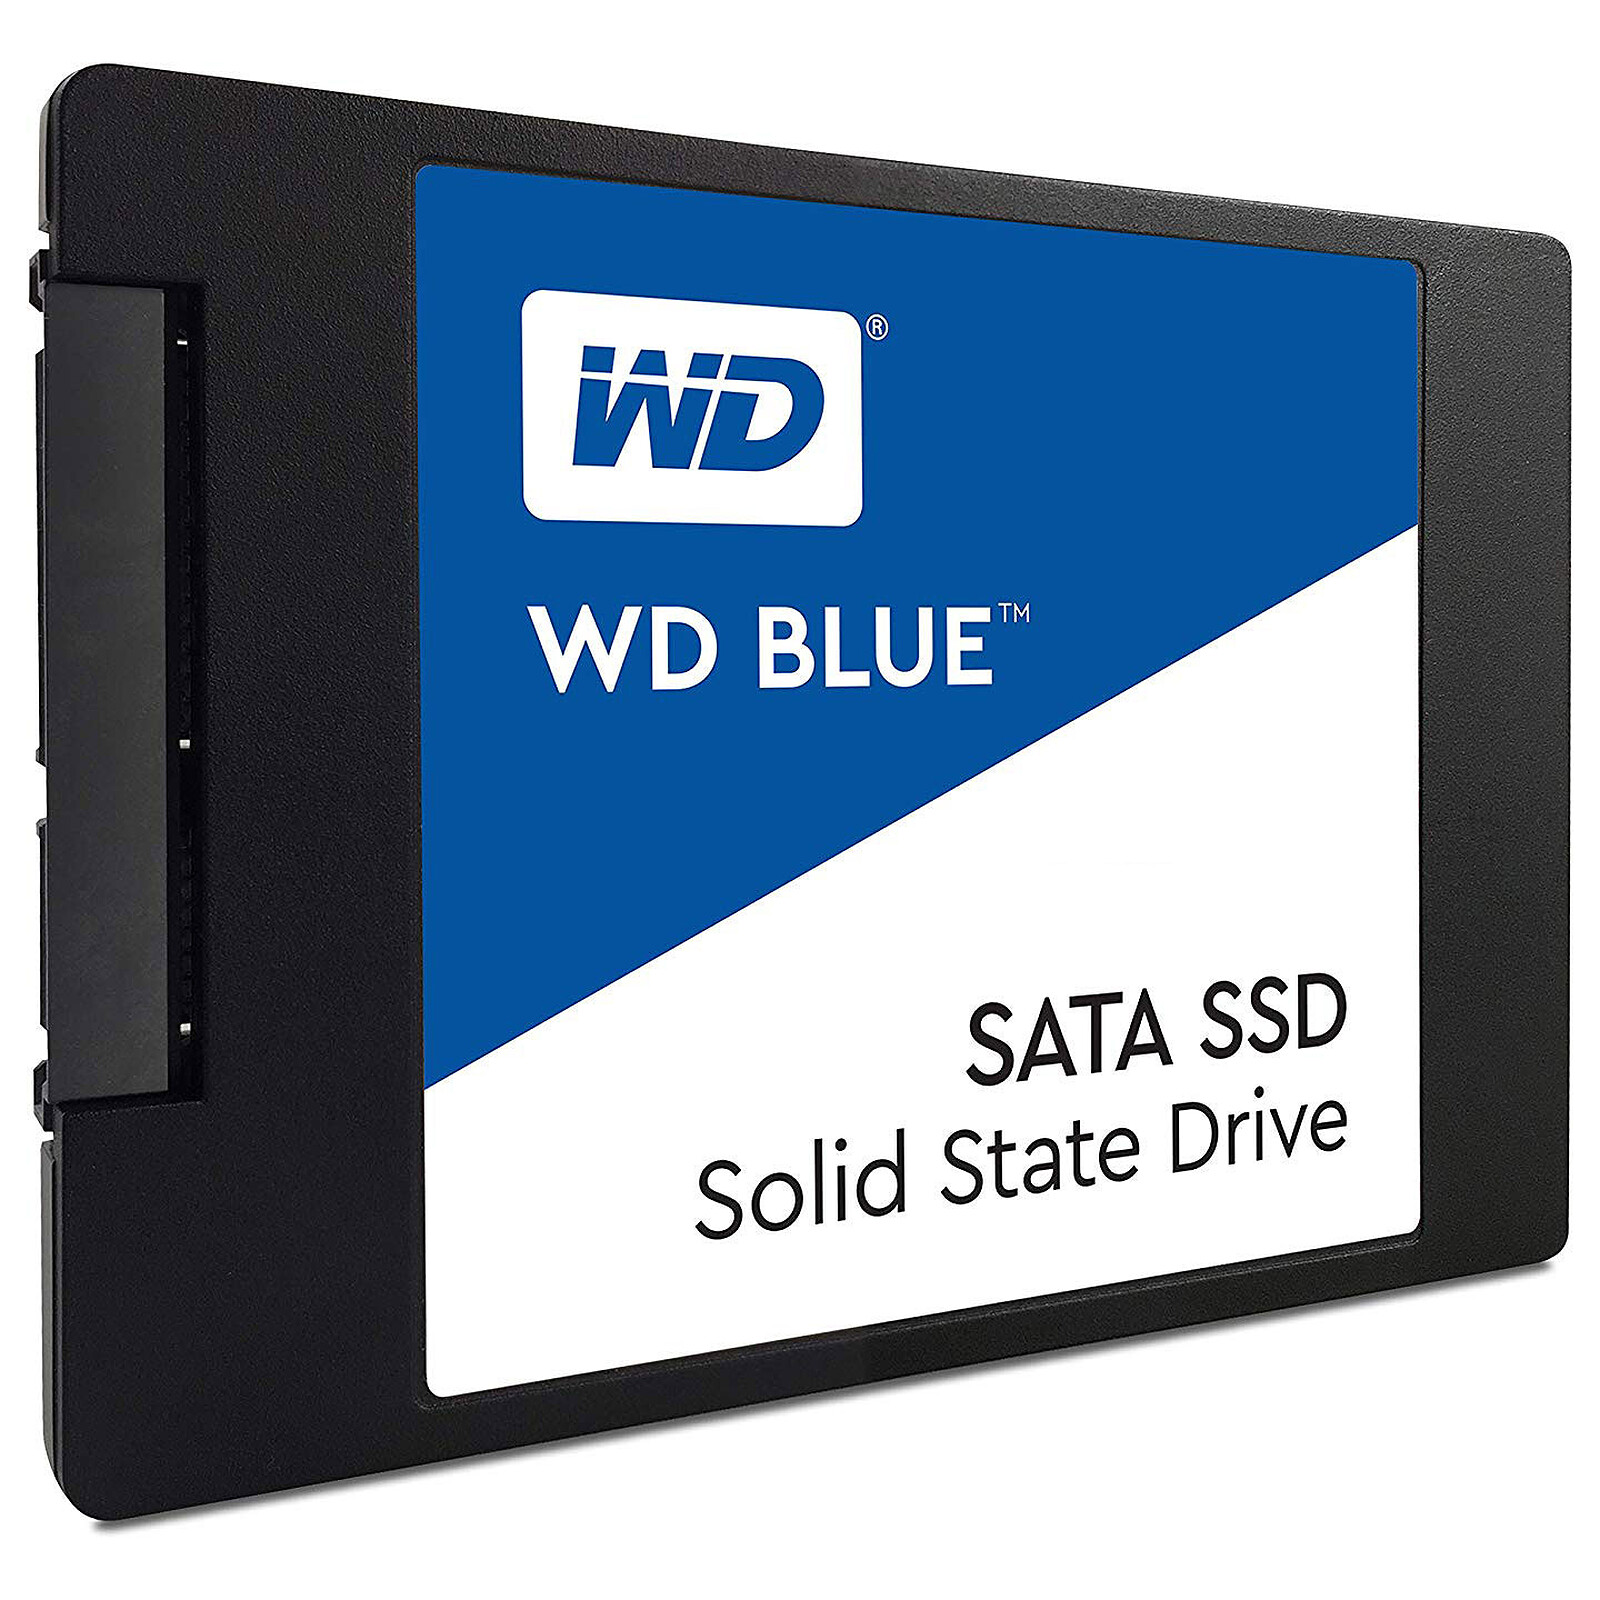 Western Digital SSD WD Blue SA510 500 Go - 2.5 - Disque SSD - LDLC